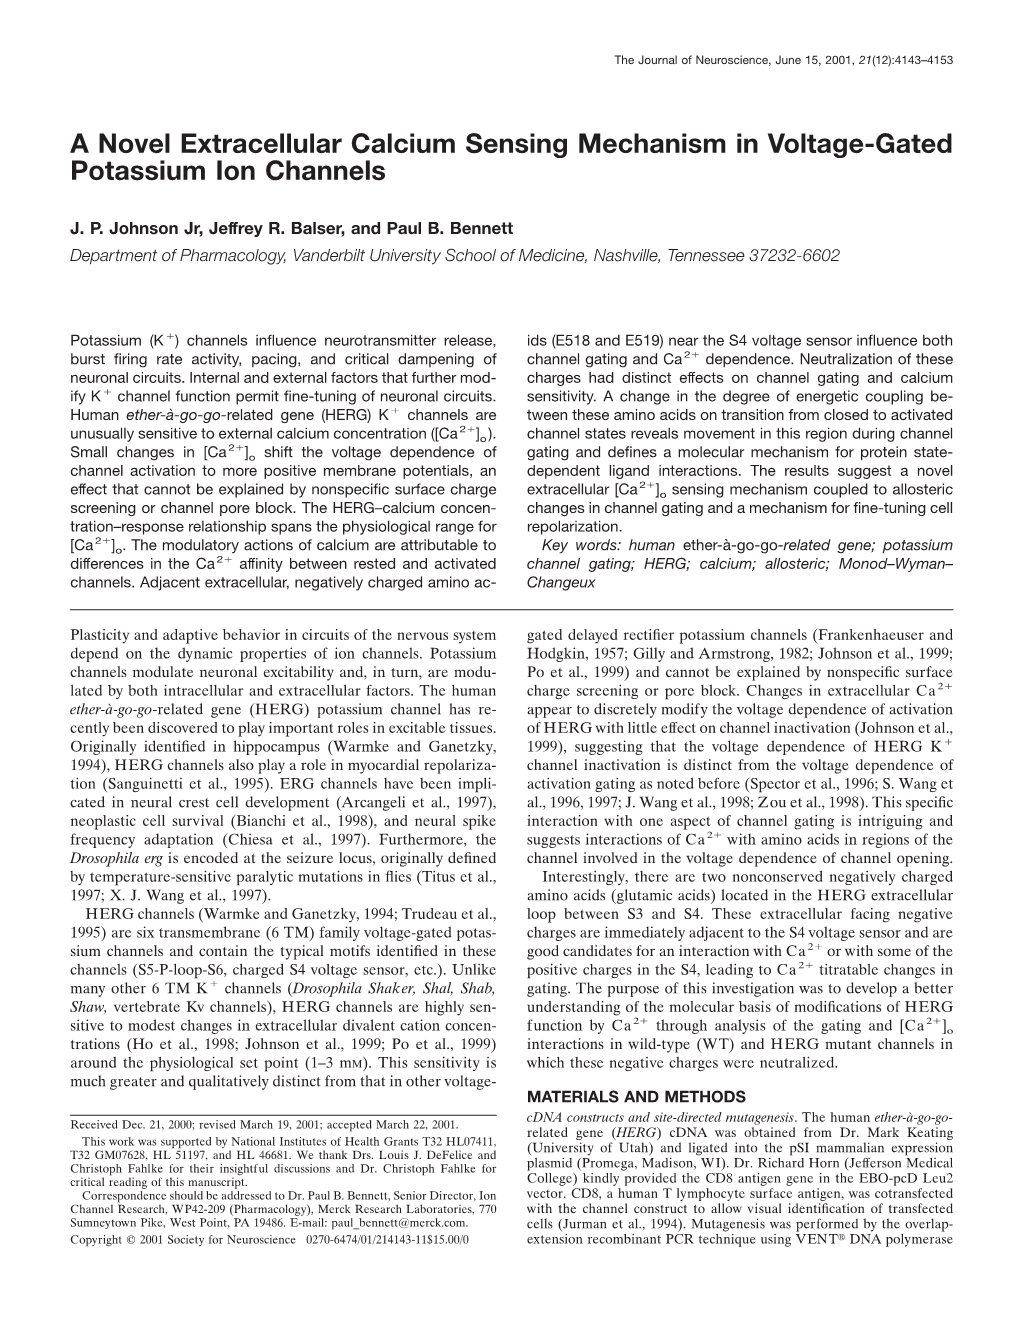 A Novel Extracellular Calcium Sensing Mechanism in Voltage-Gated Potassium Ion Channels